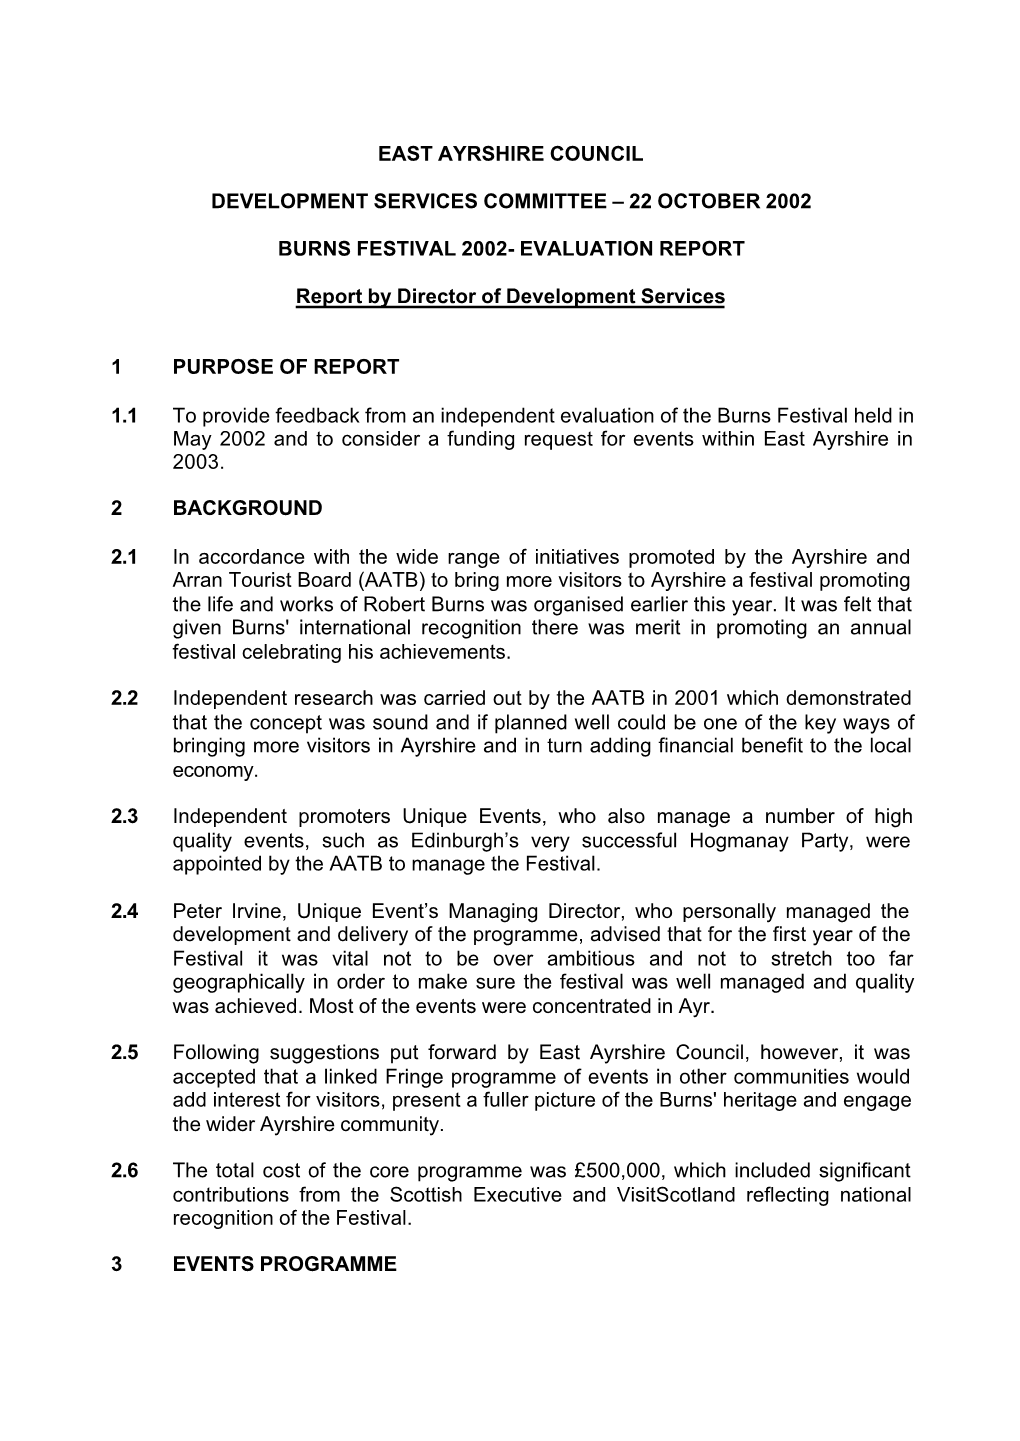 Burns Festival 2002- Evaluation Report